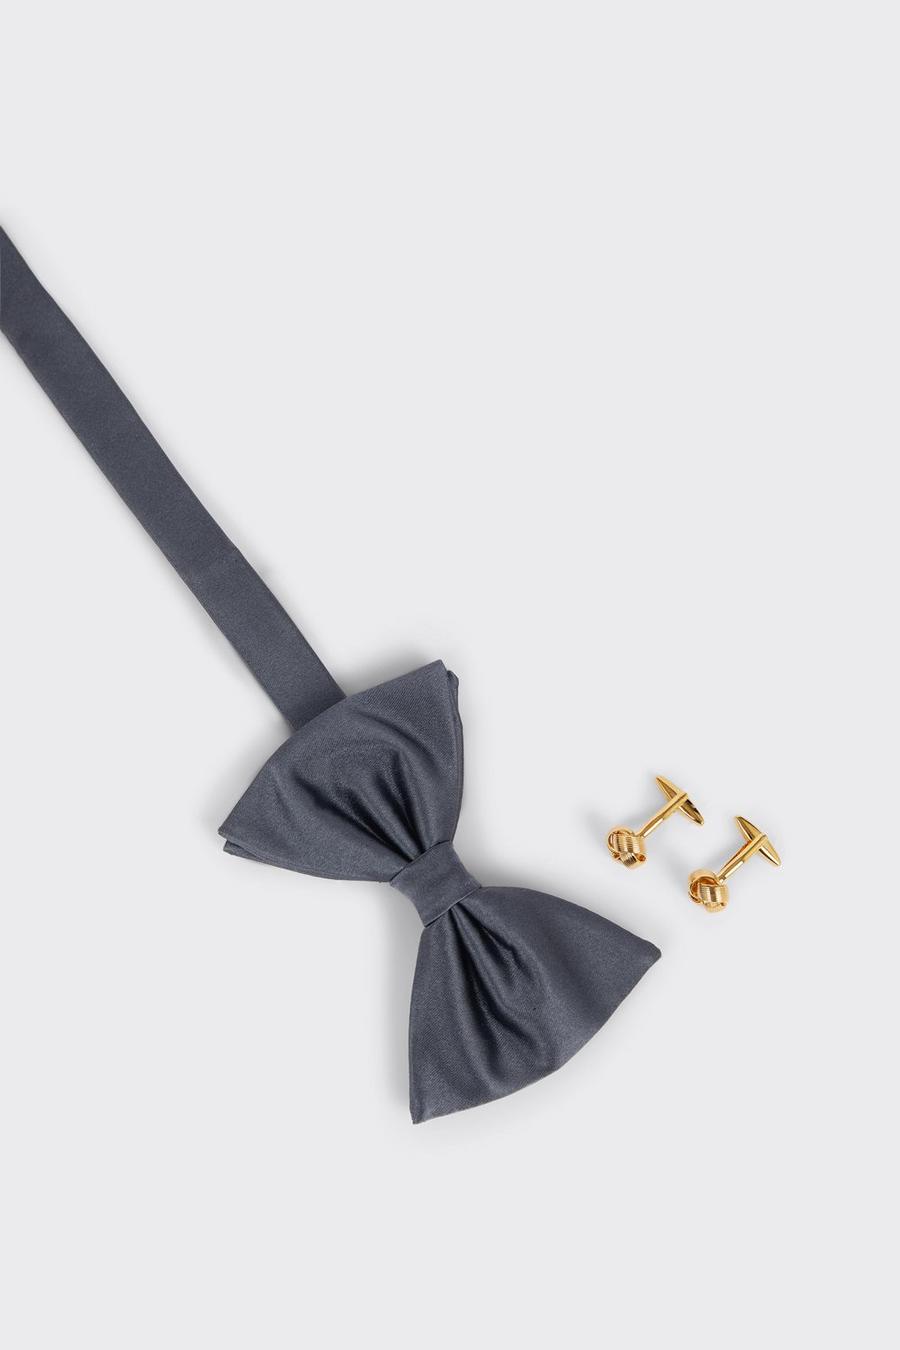 Slate Silk Bow tie, Handkerchief & Cufflinks